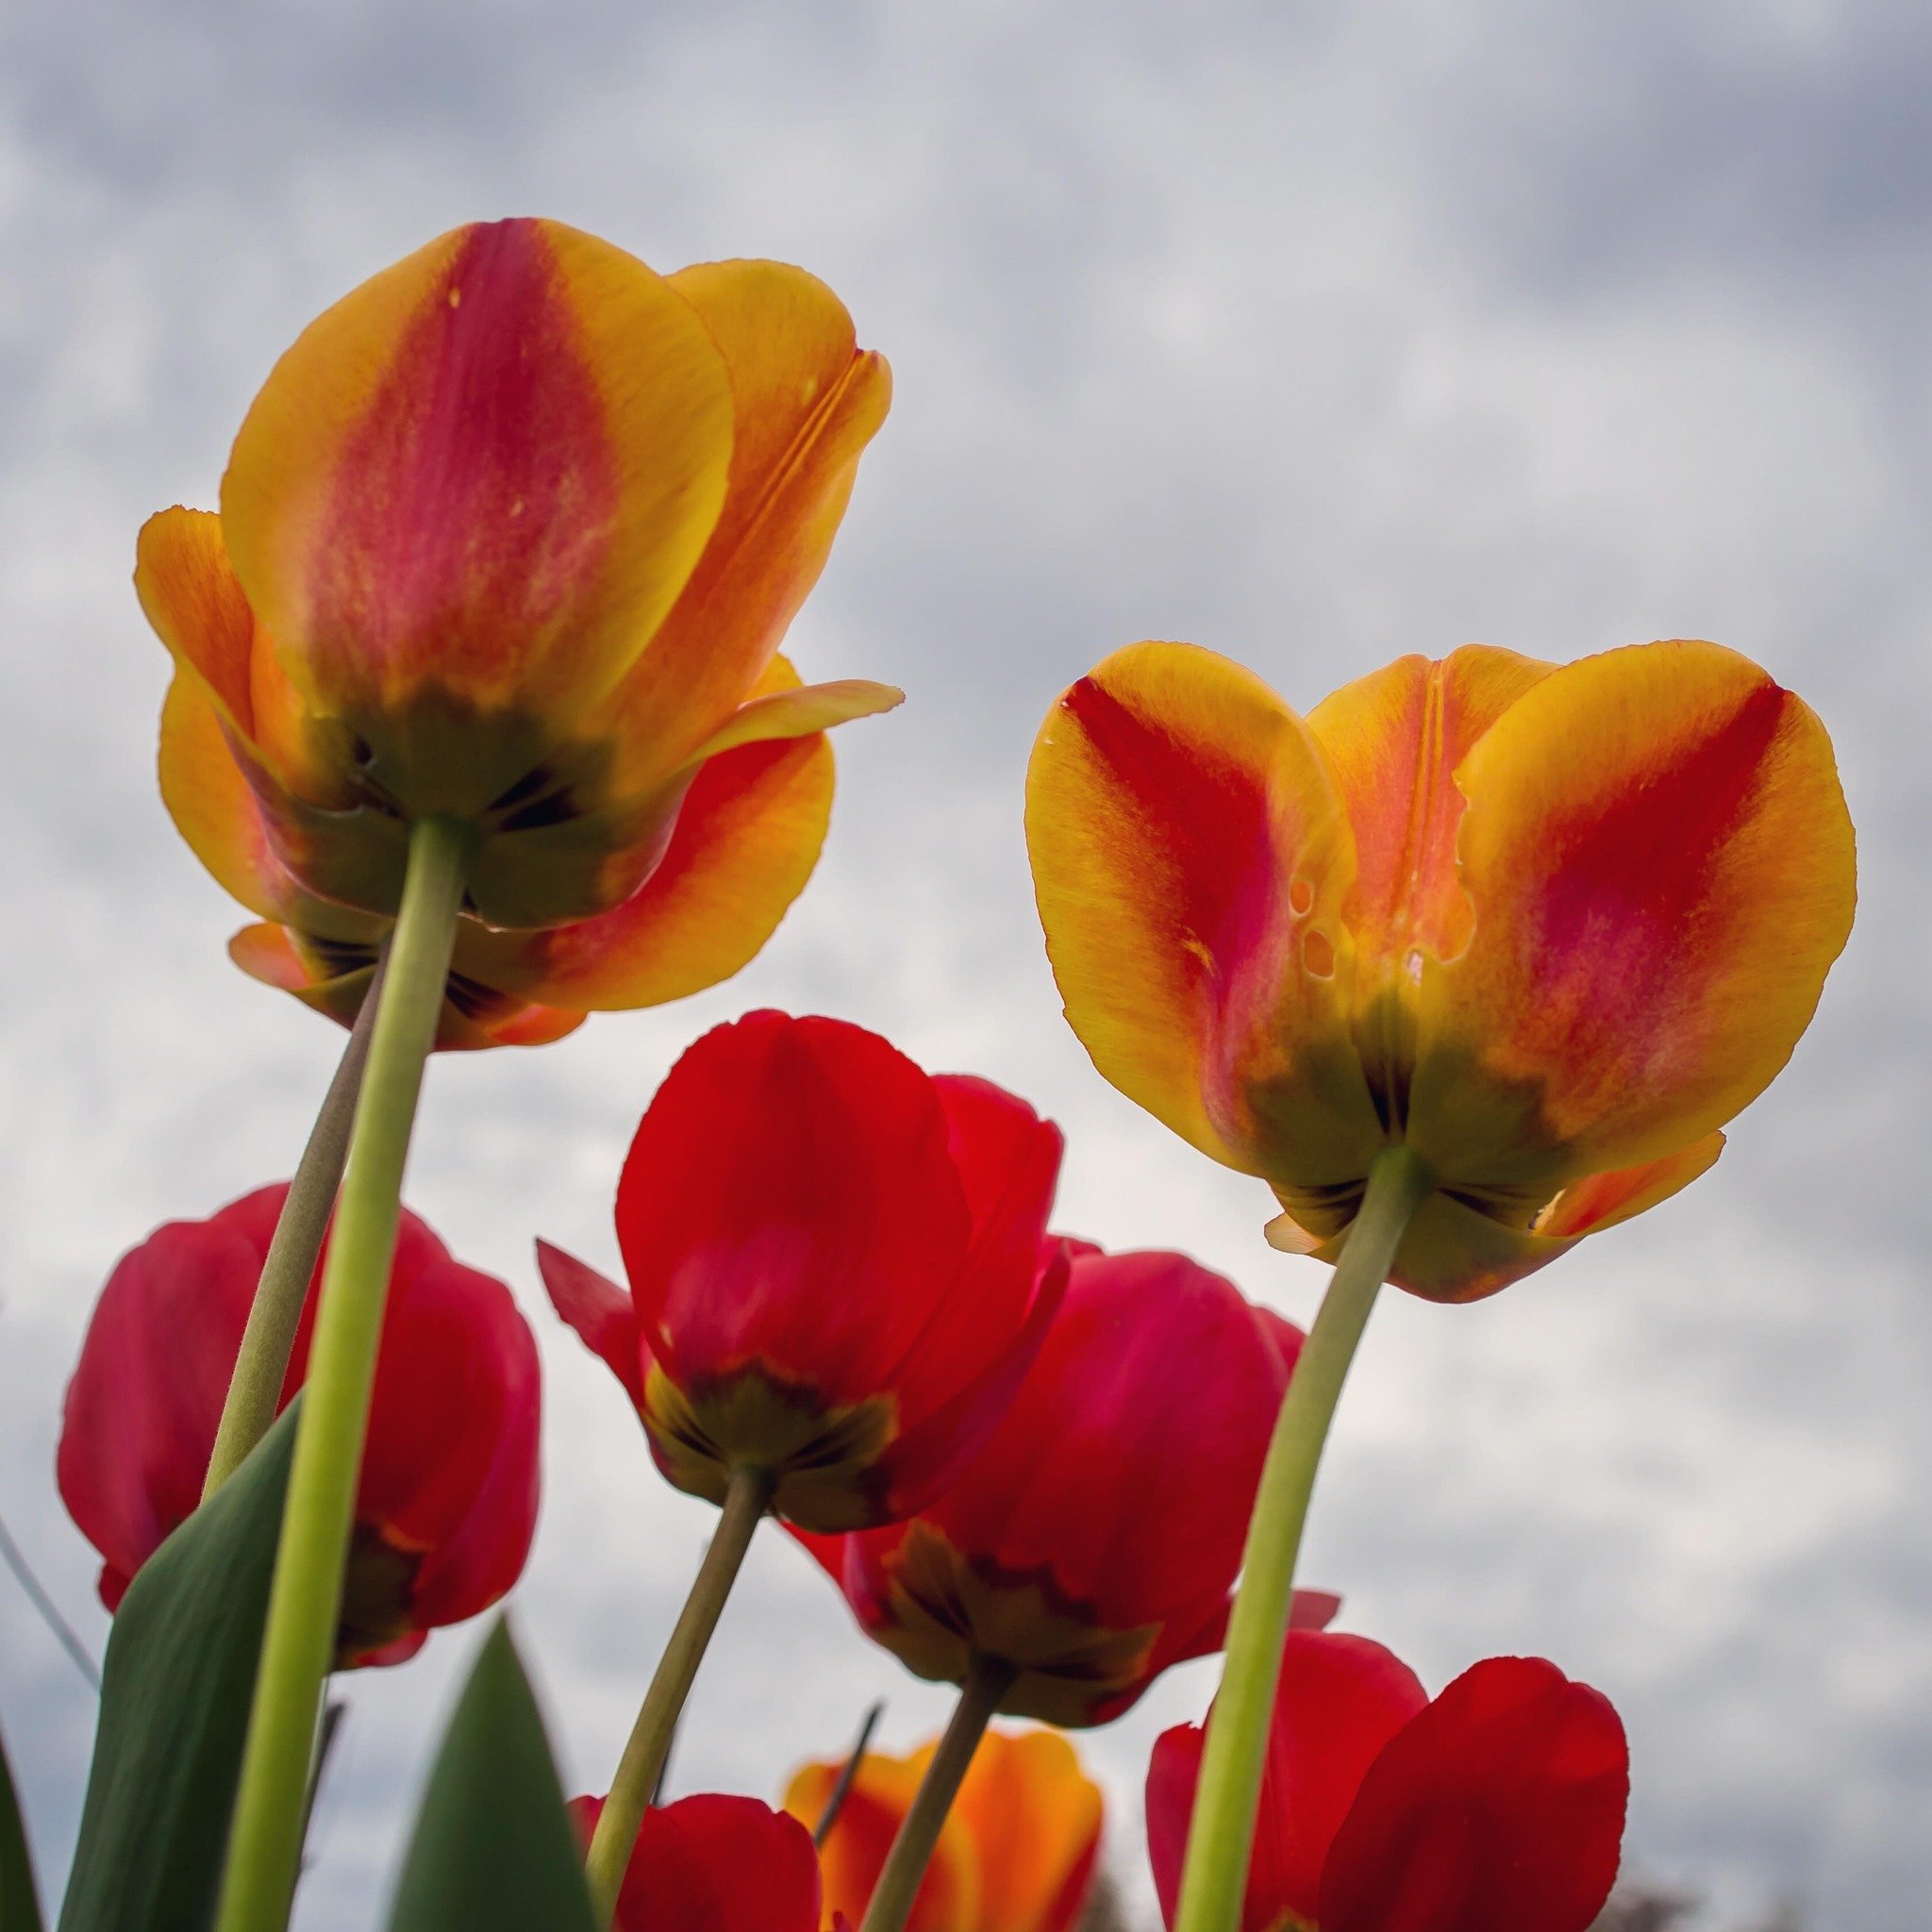 Happy Mother&rsquo;s Day!  #happymothersday #springintoronto #tulips #sirwinstonchurchillpark #femalephotographer #nature #urbanmature #agreatcapture #midtowntoronto